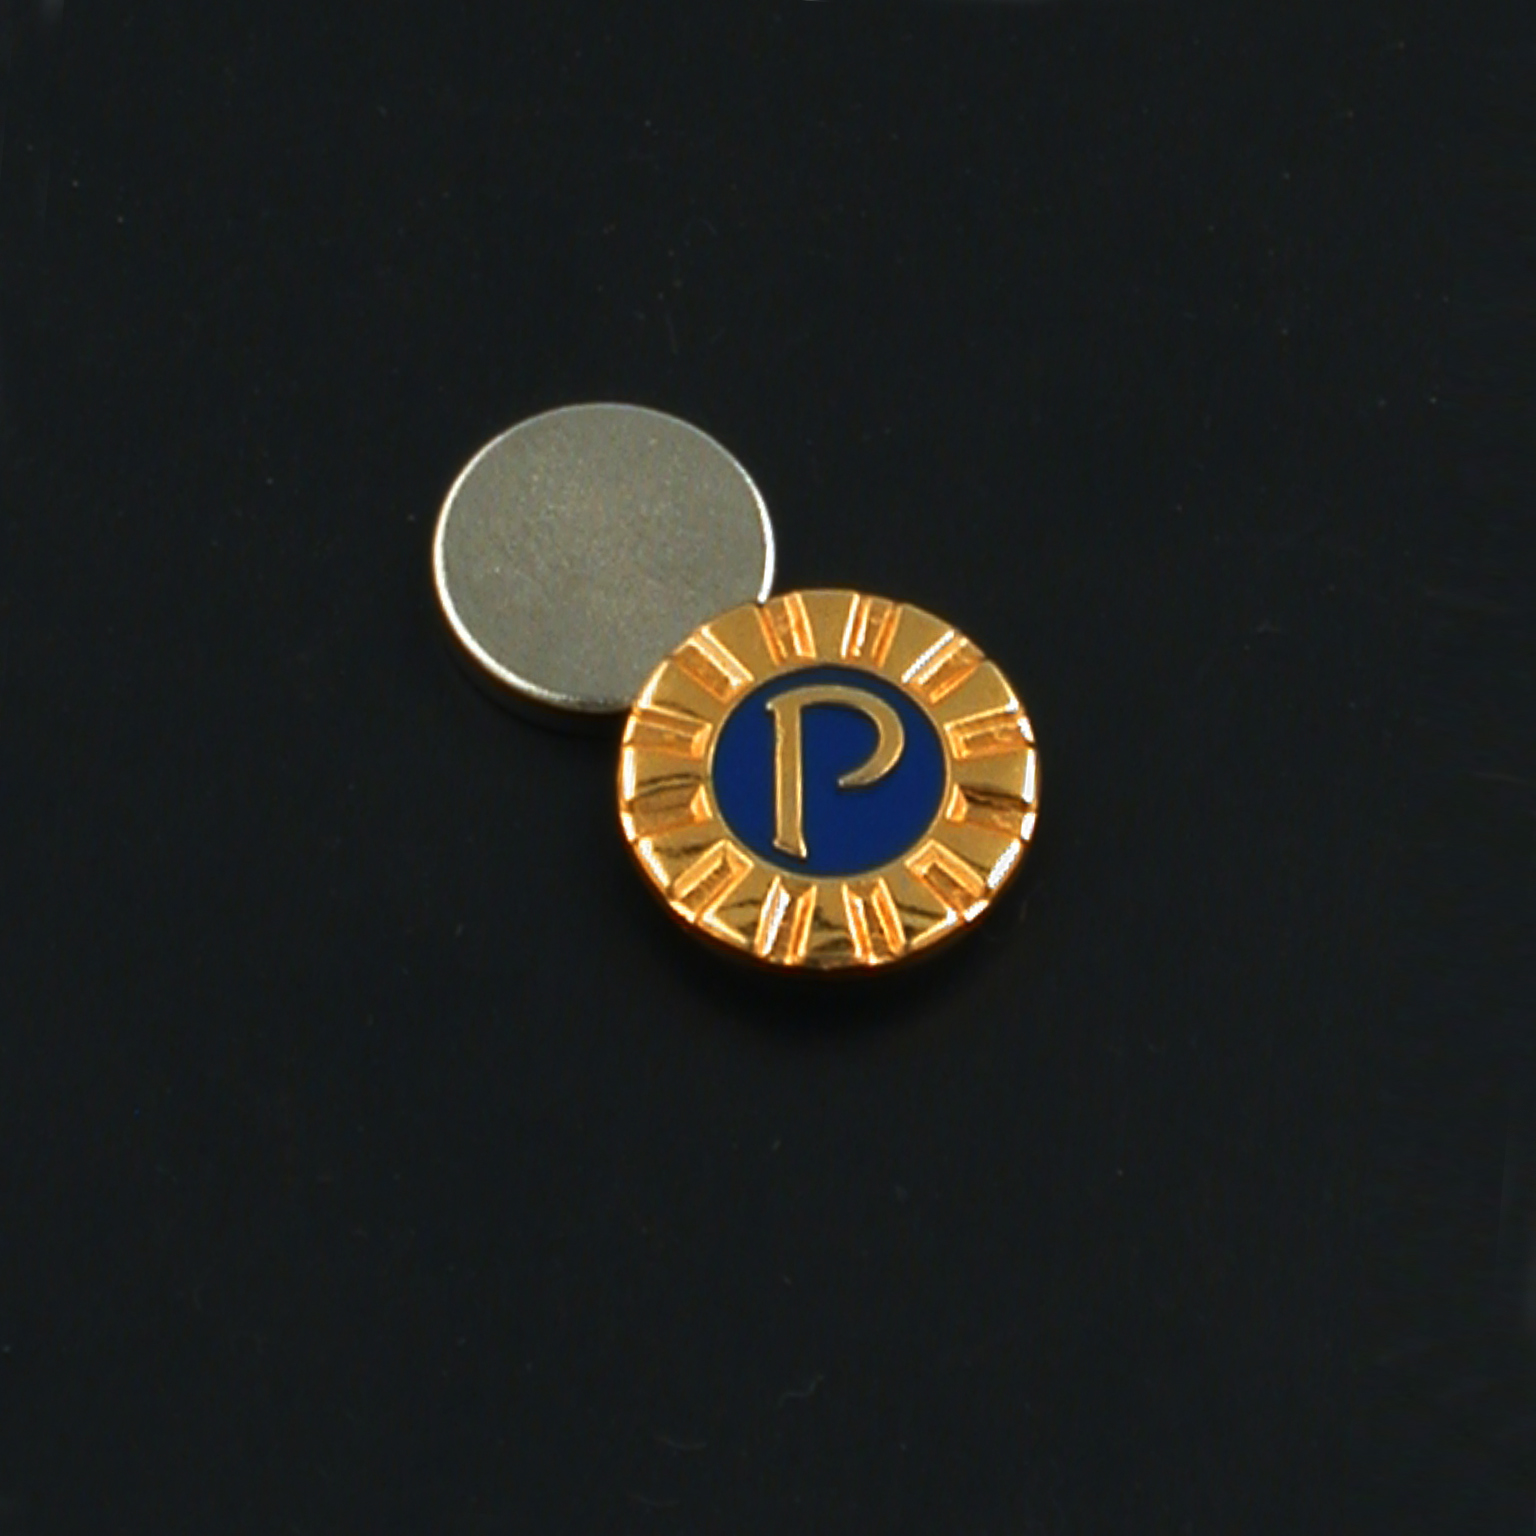 probus-pin-o12mm-op-magneet-5-stuks-06-03-06-probus-pin-o12mm-op-magneet.jpg